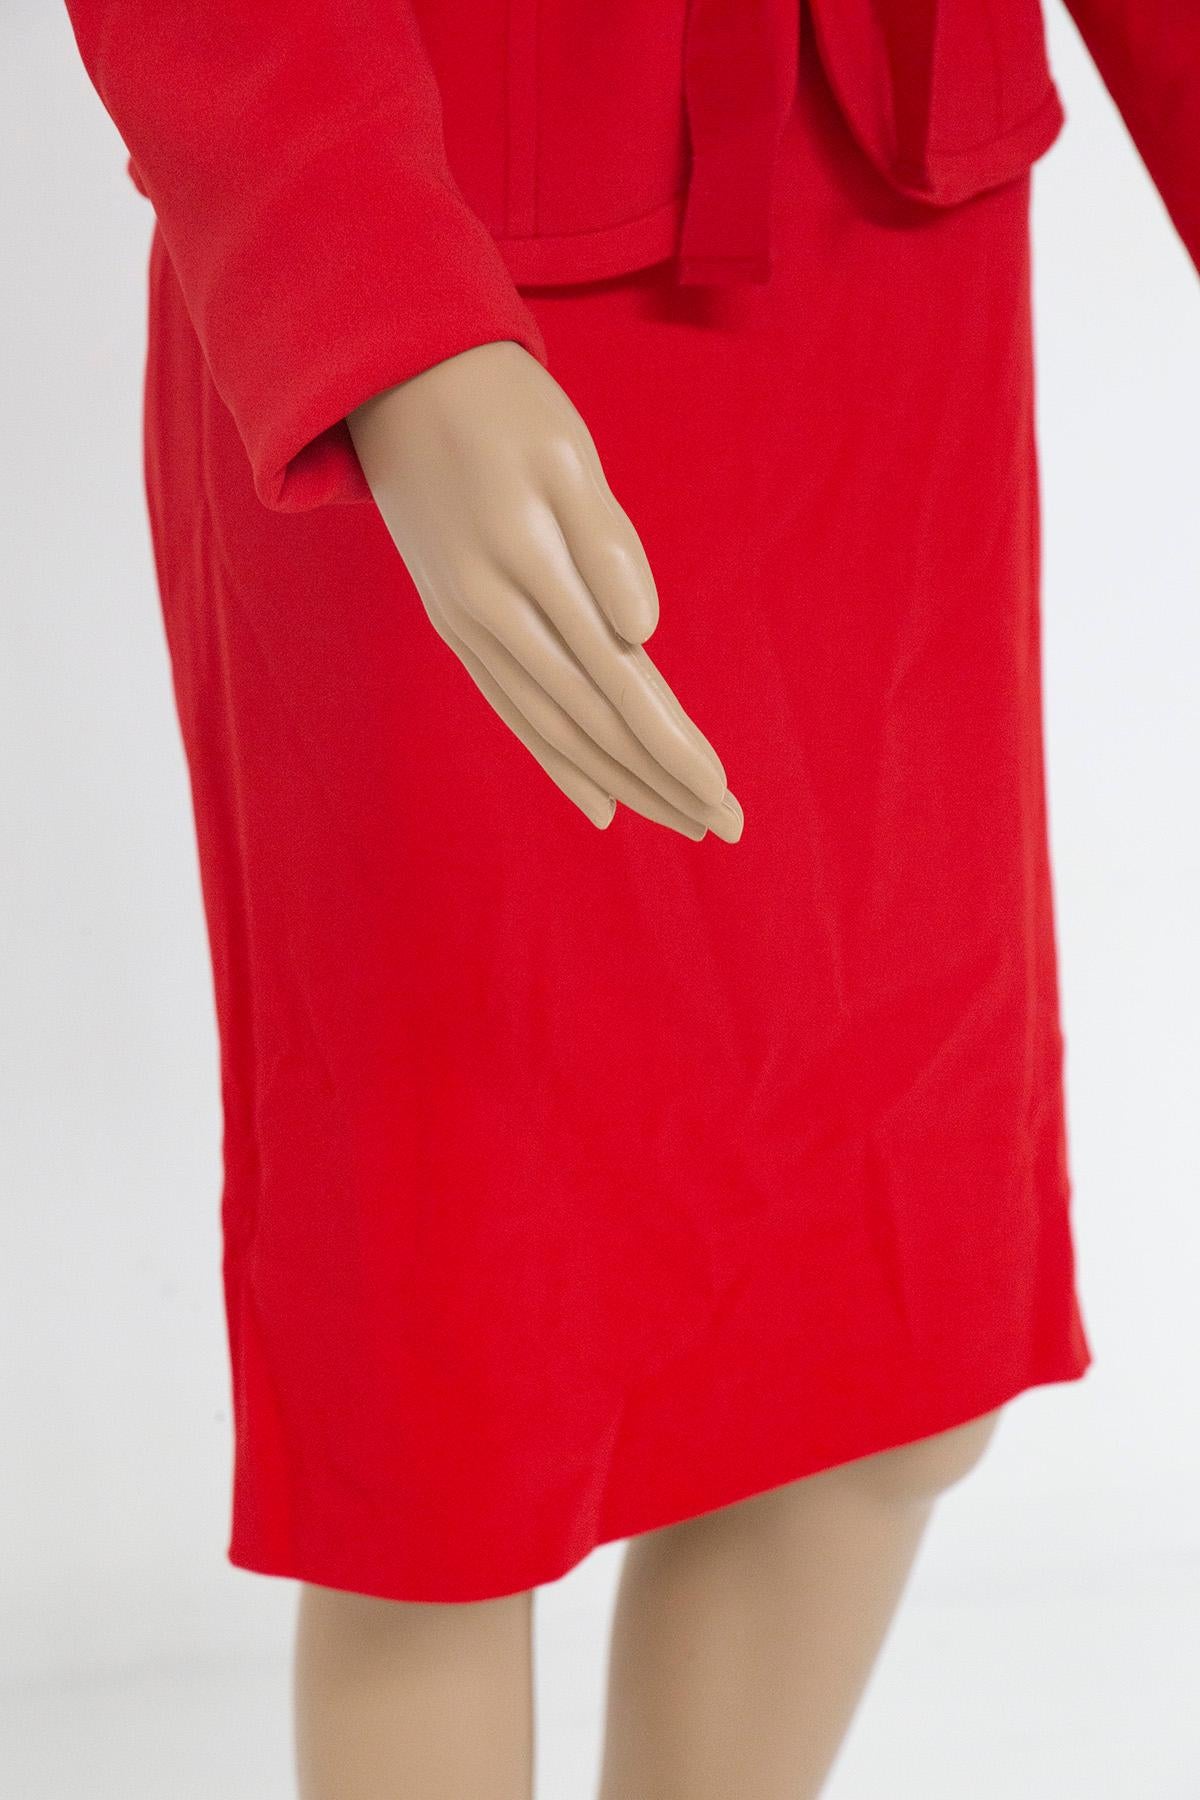 Valentino Garavani Red suit Sheath Dresses 1990 For Sale 2